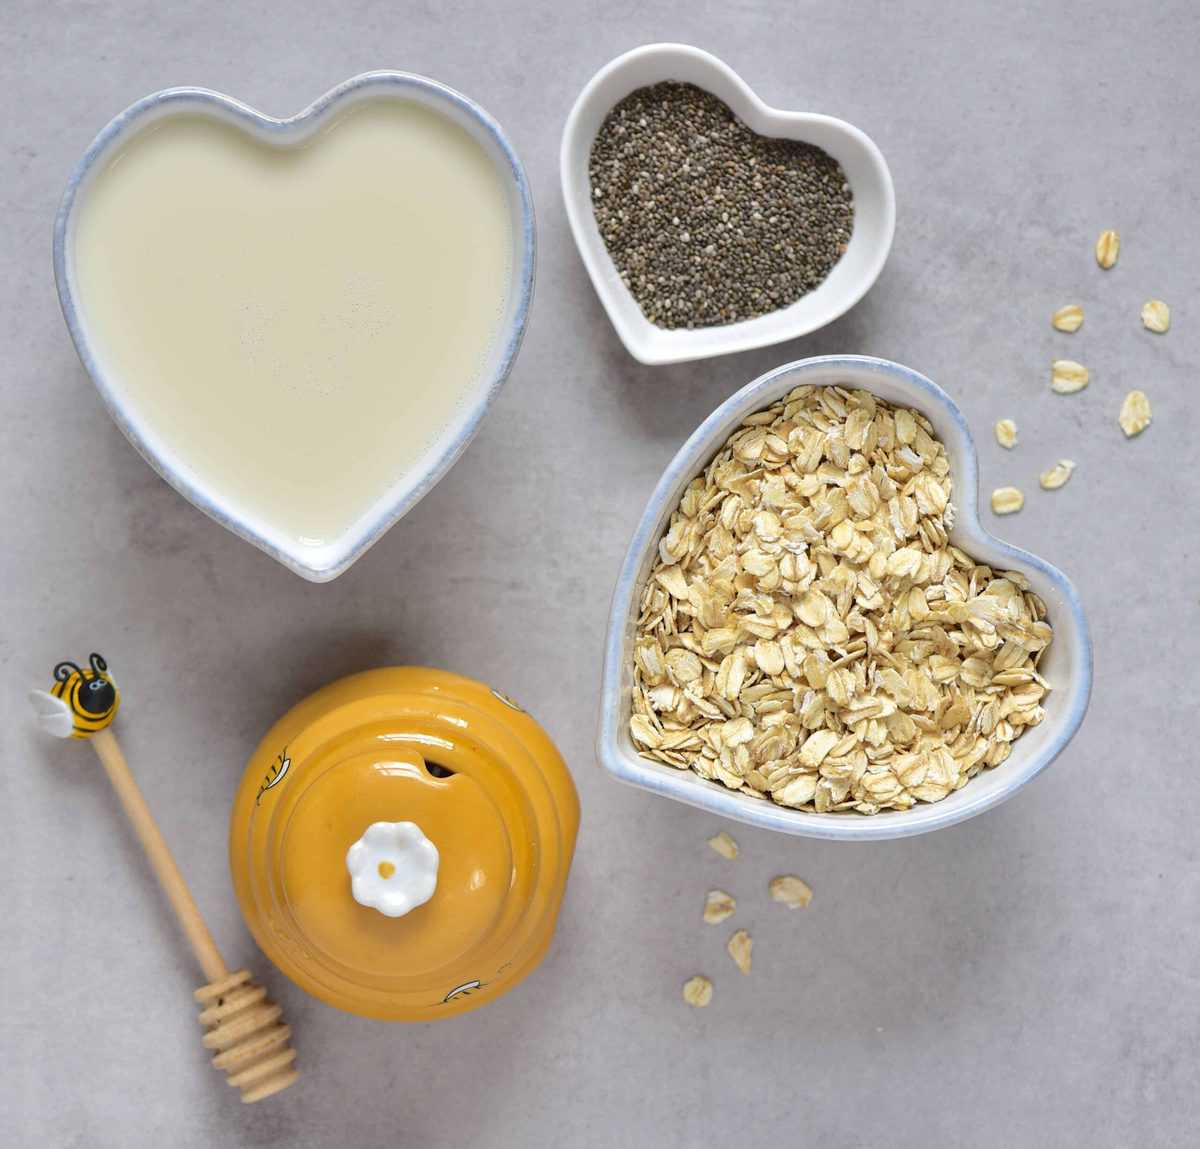 Overnight oats ingredients - oats, chia seeds, milk, honey